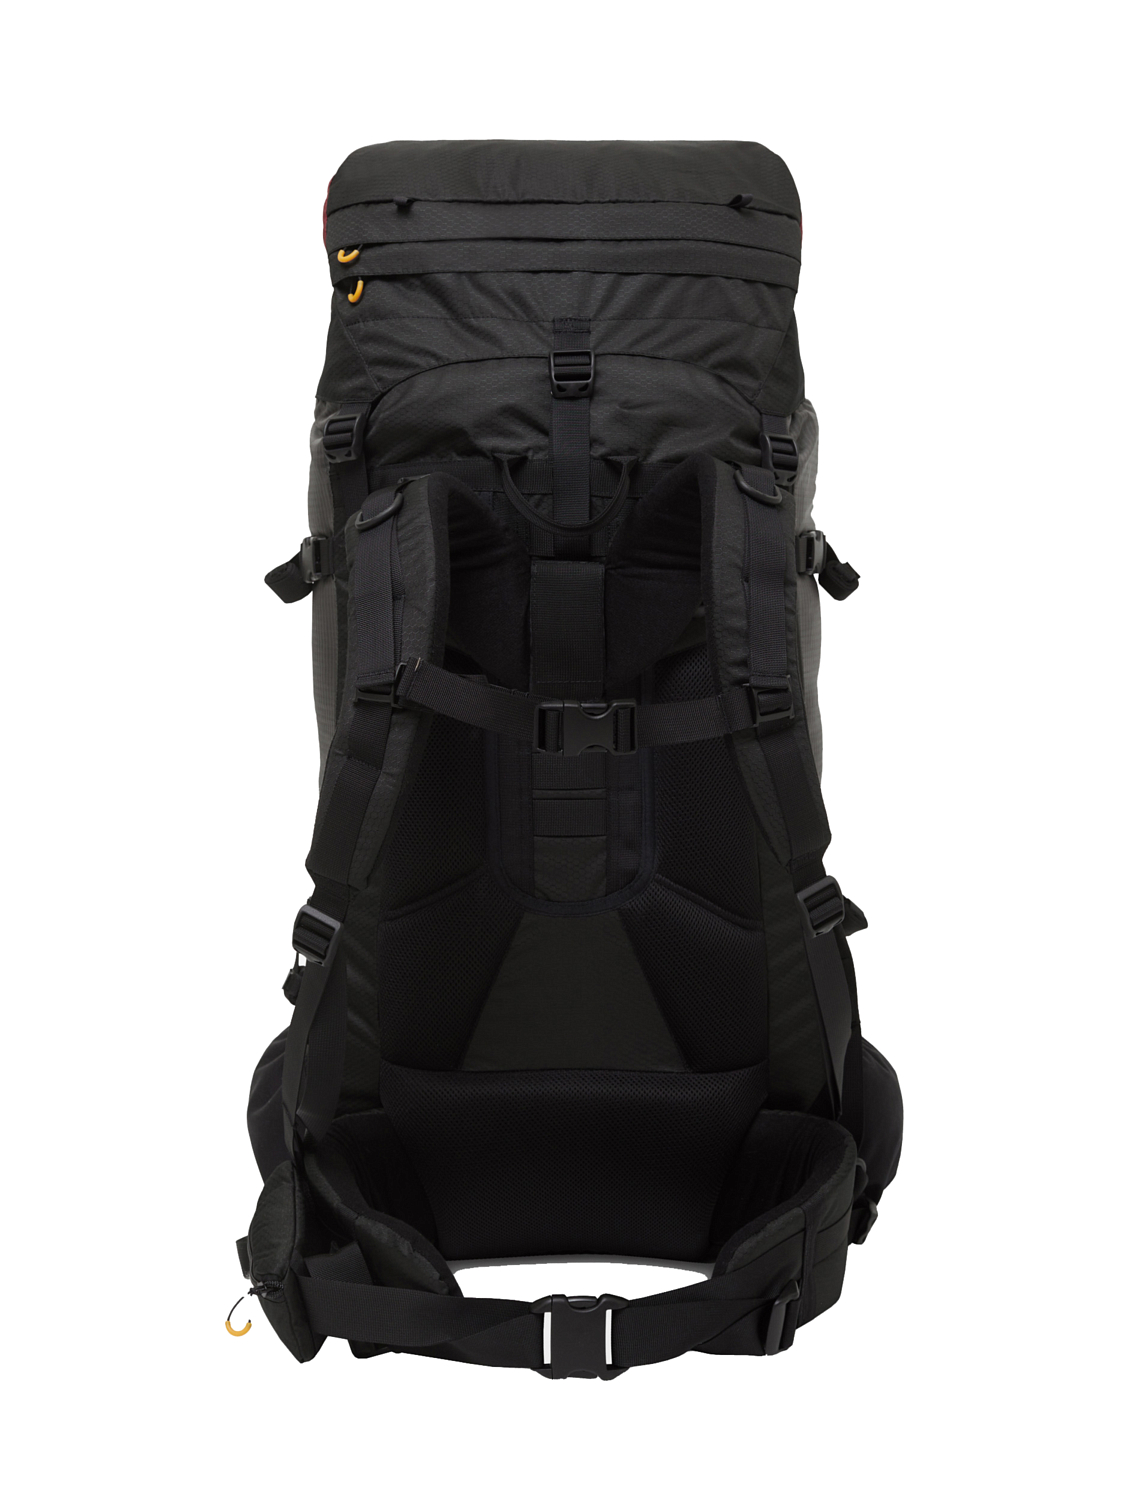 Рюкзак BASK Shiviling 90 V3 черный/темный/светлый-серый